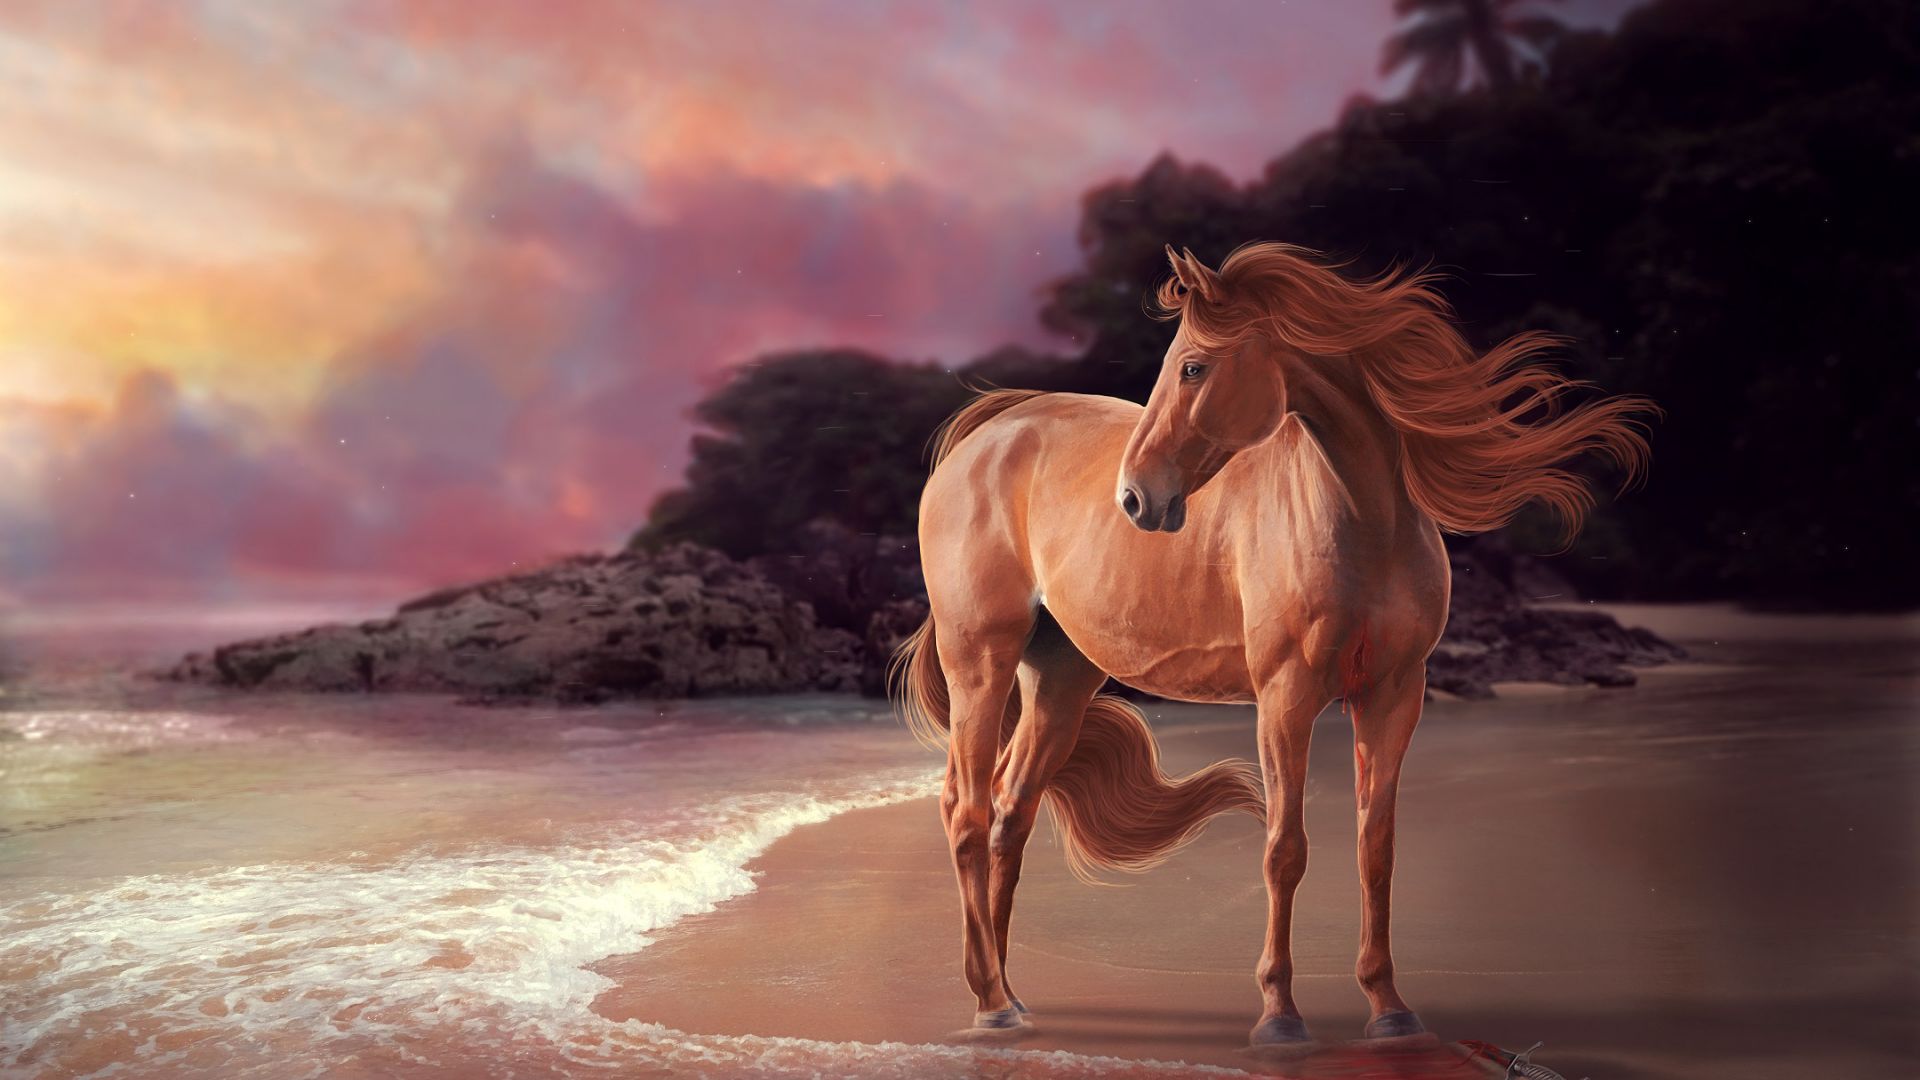 Wallpaper Horse on beach artwork fantasy